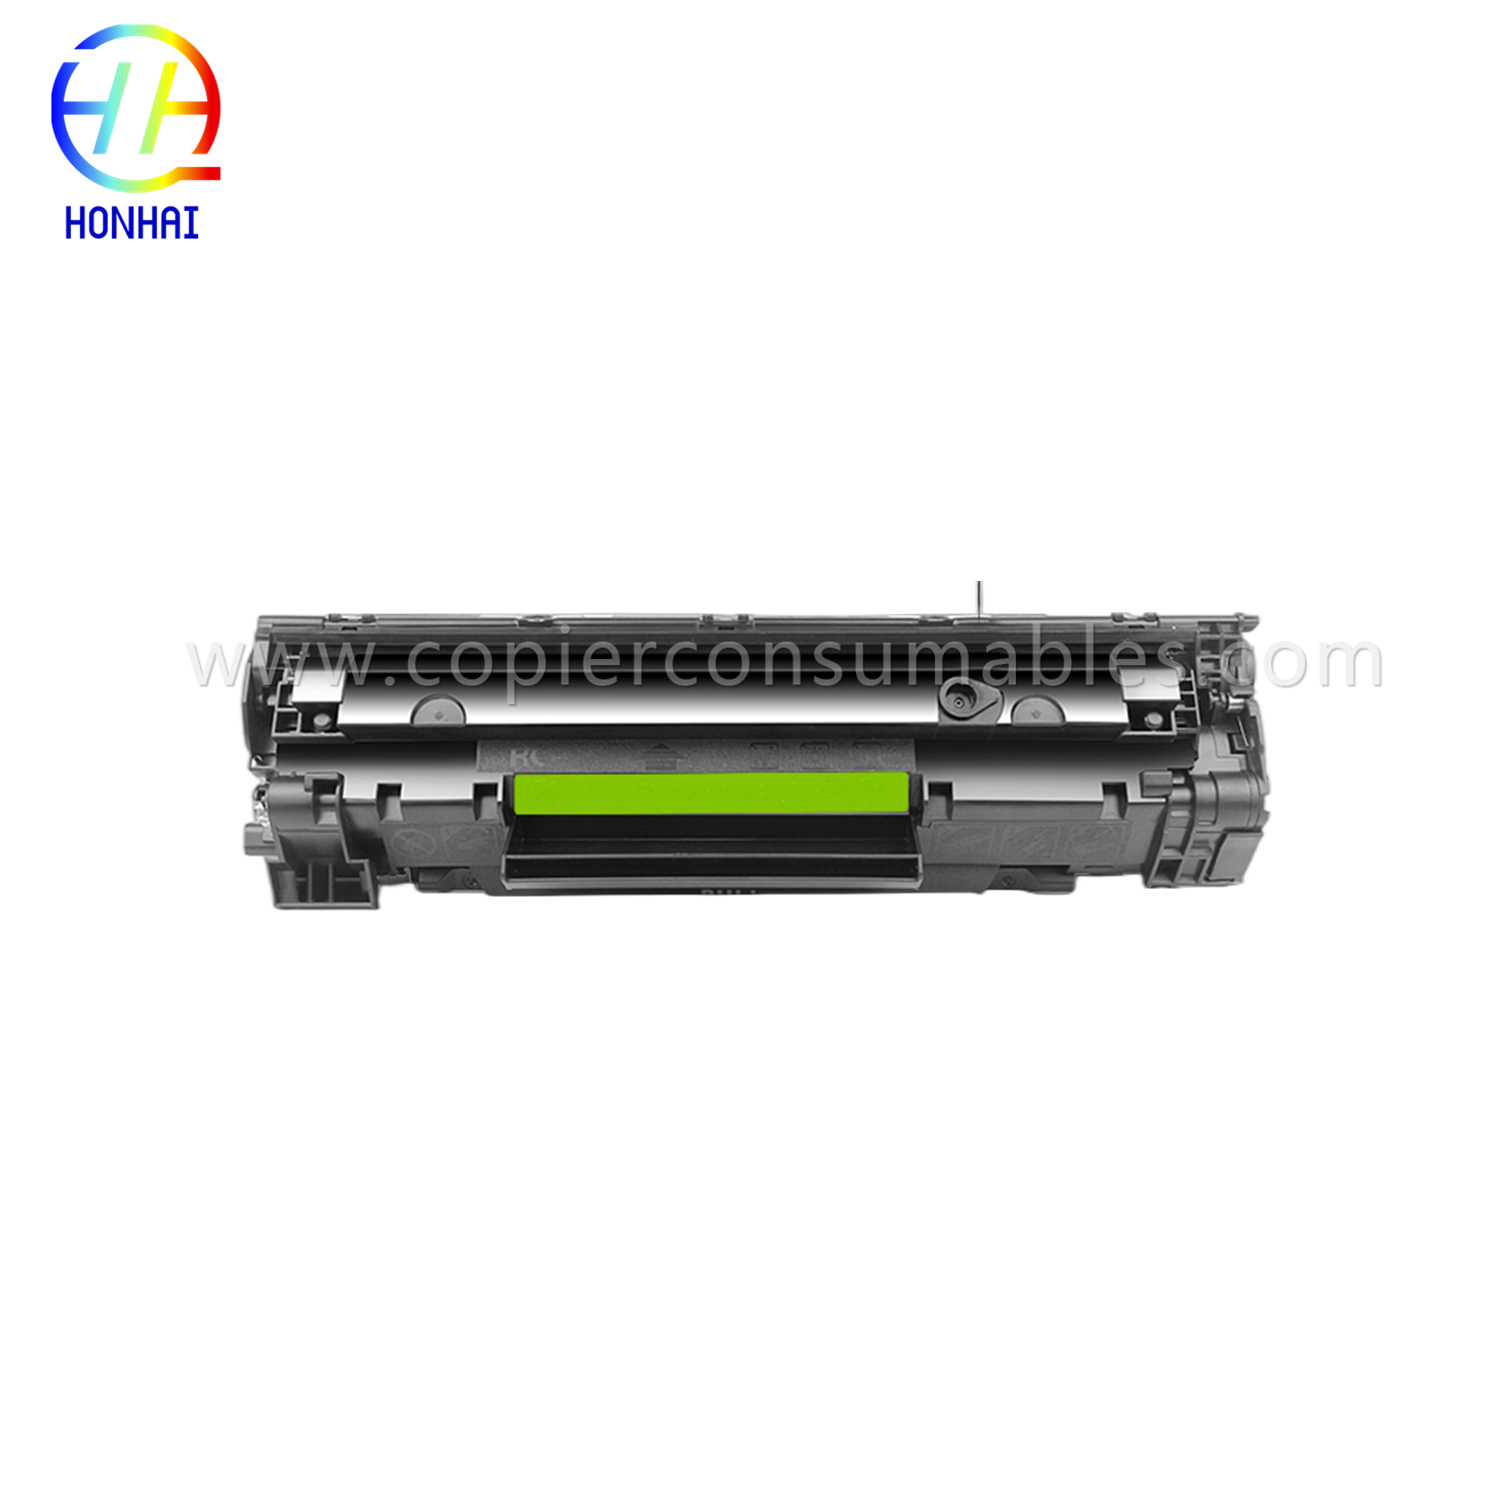 Toner Cartridge for HP Laserjet P1005 (CB435A 35A)